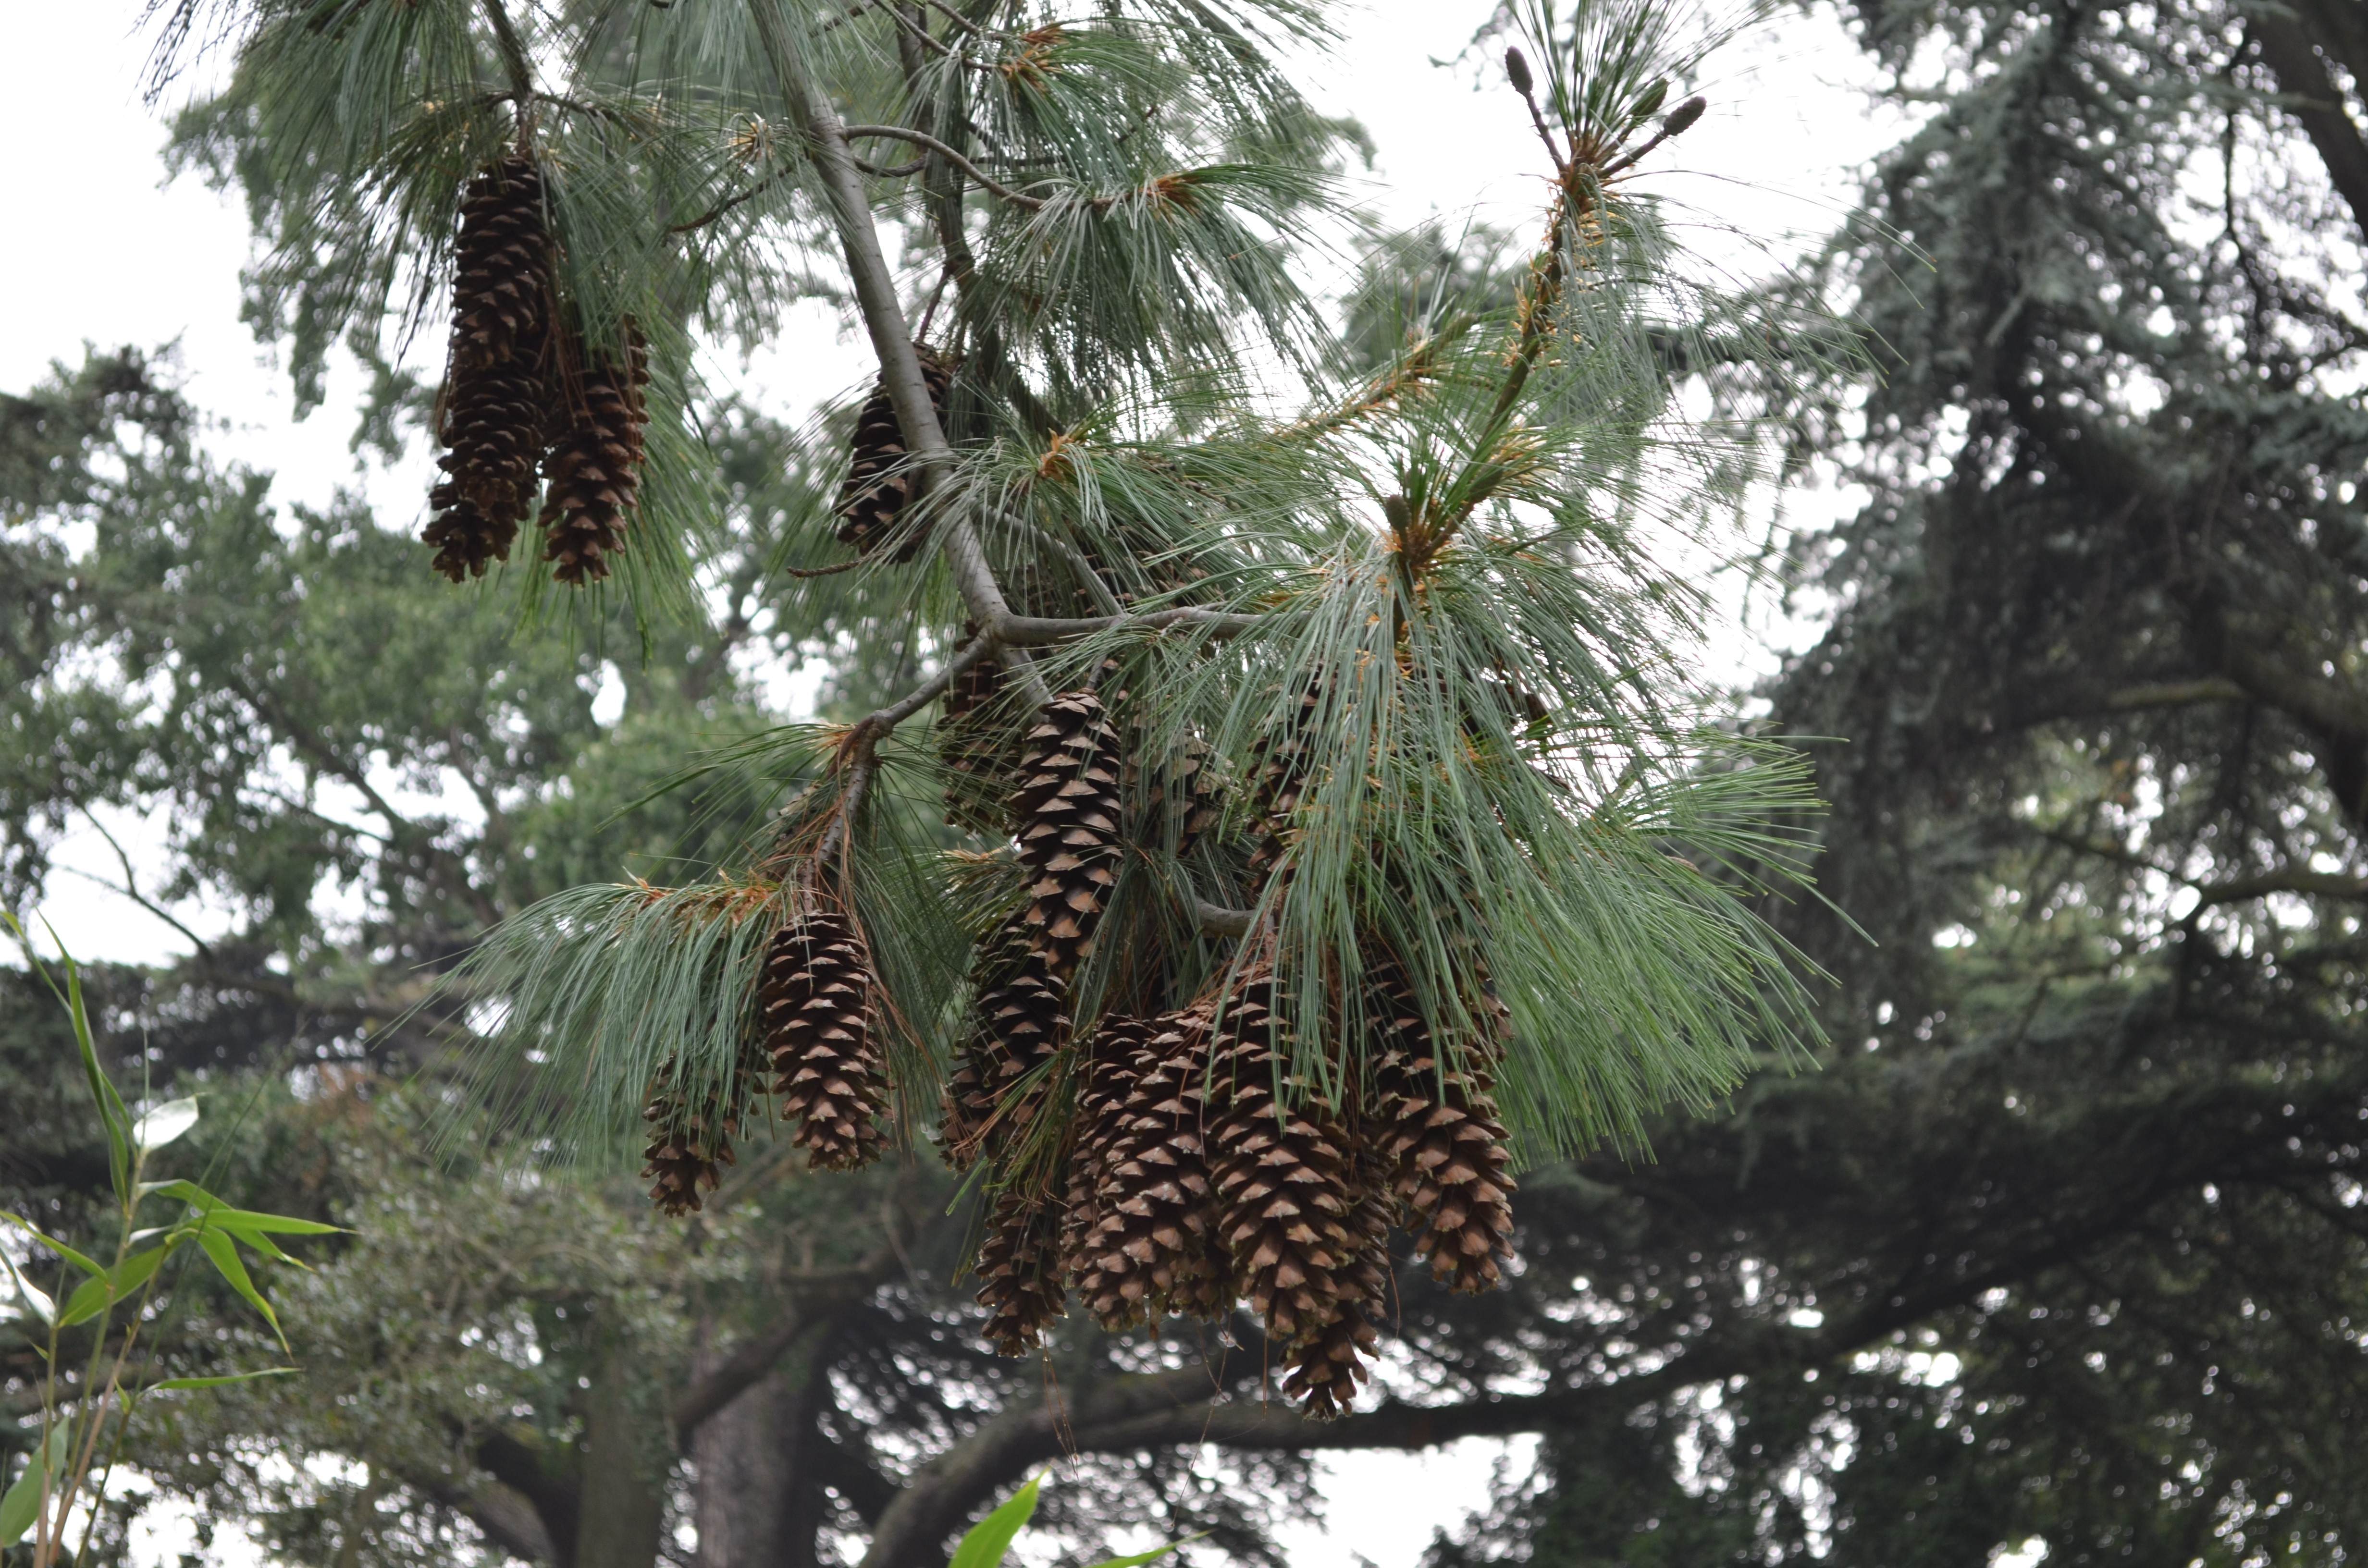 General 4928x3264 pine cones plants outdoors